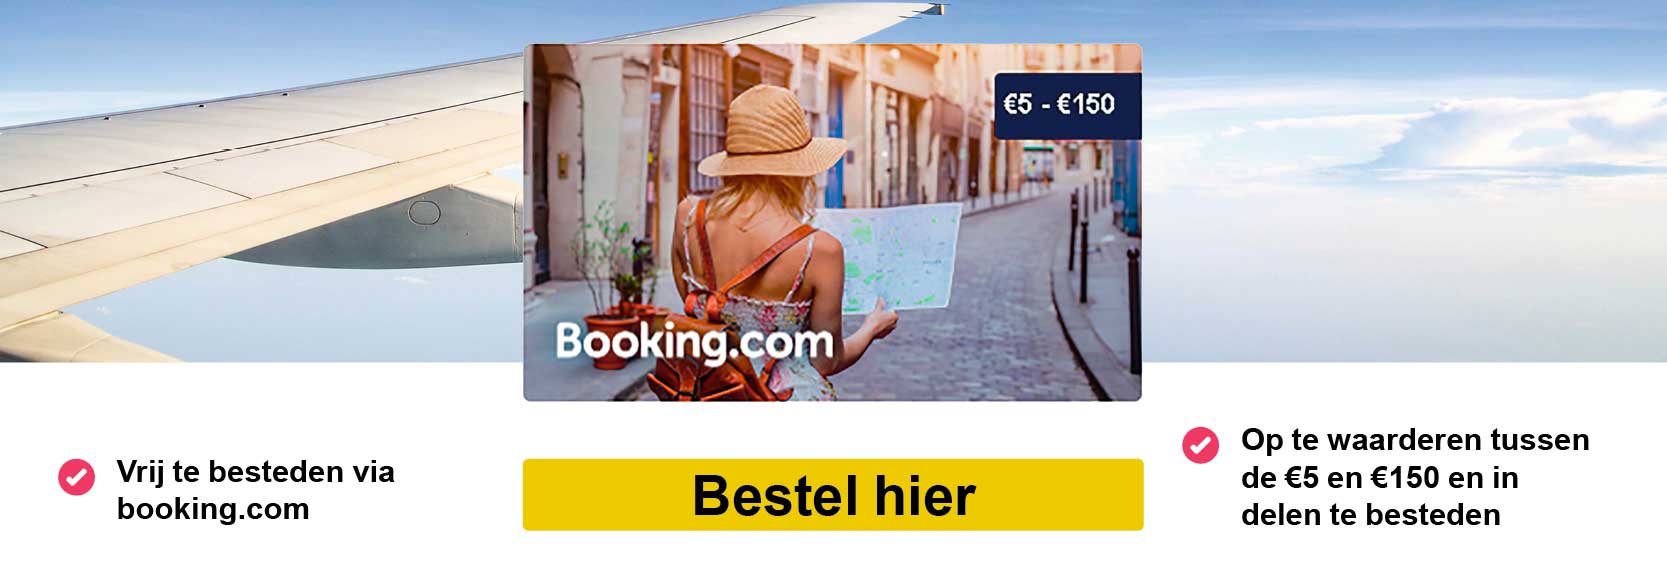 Booking.com_banner_def